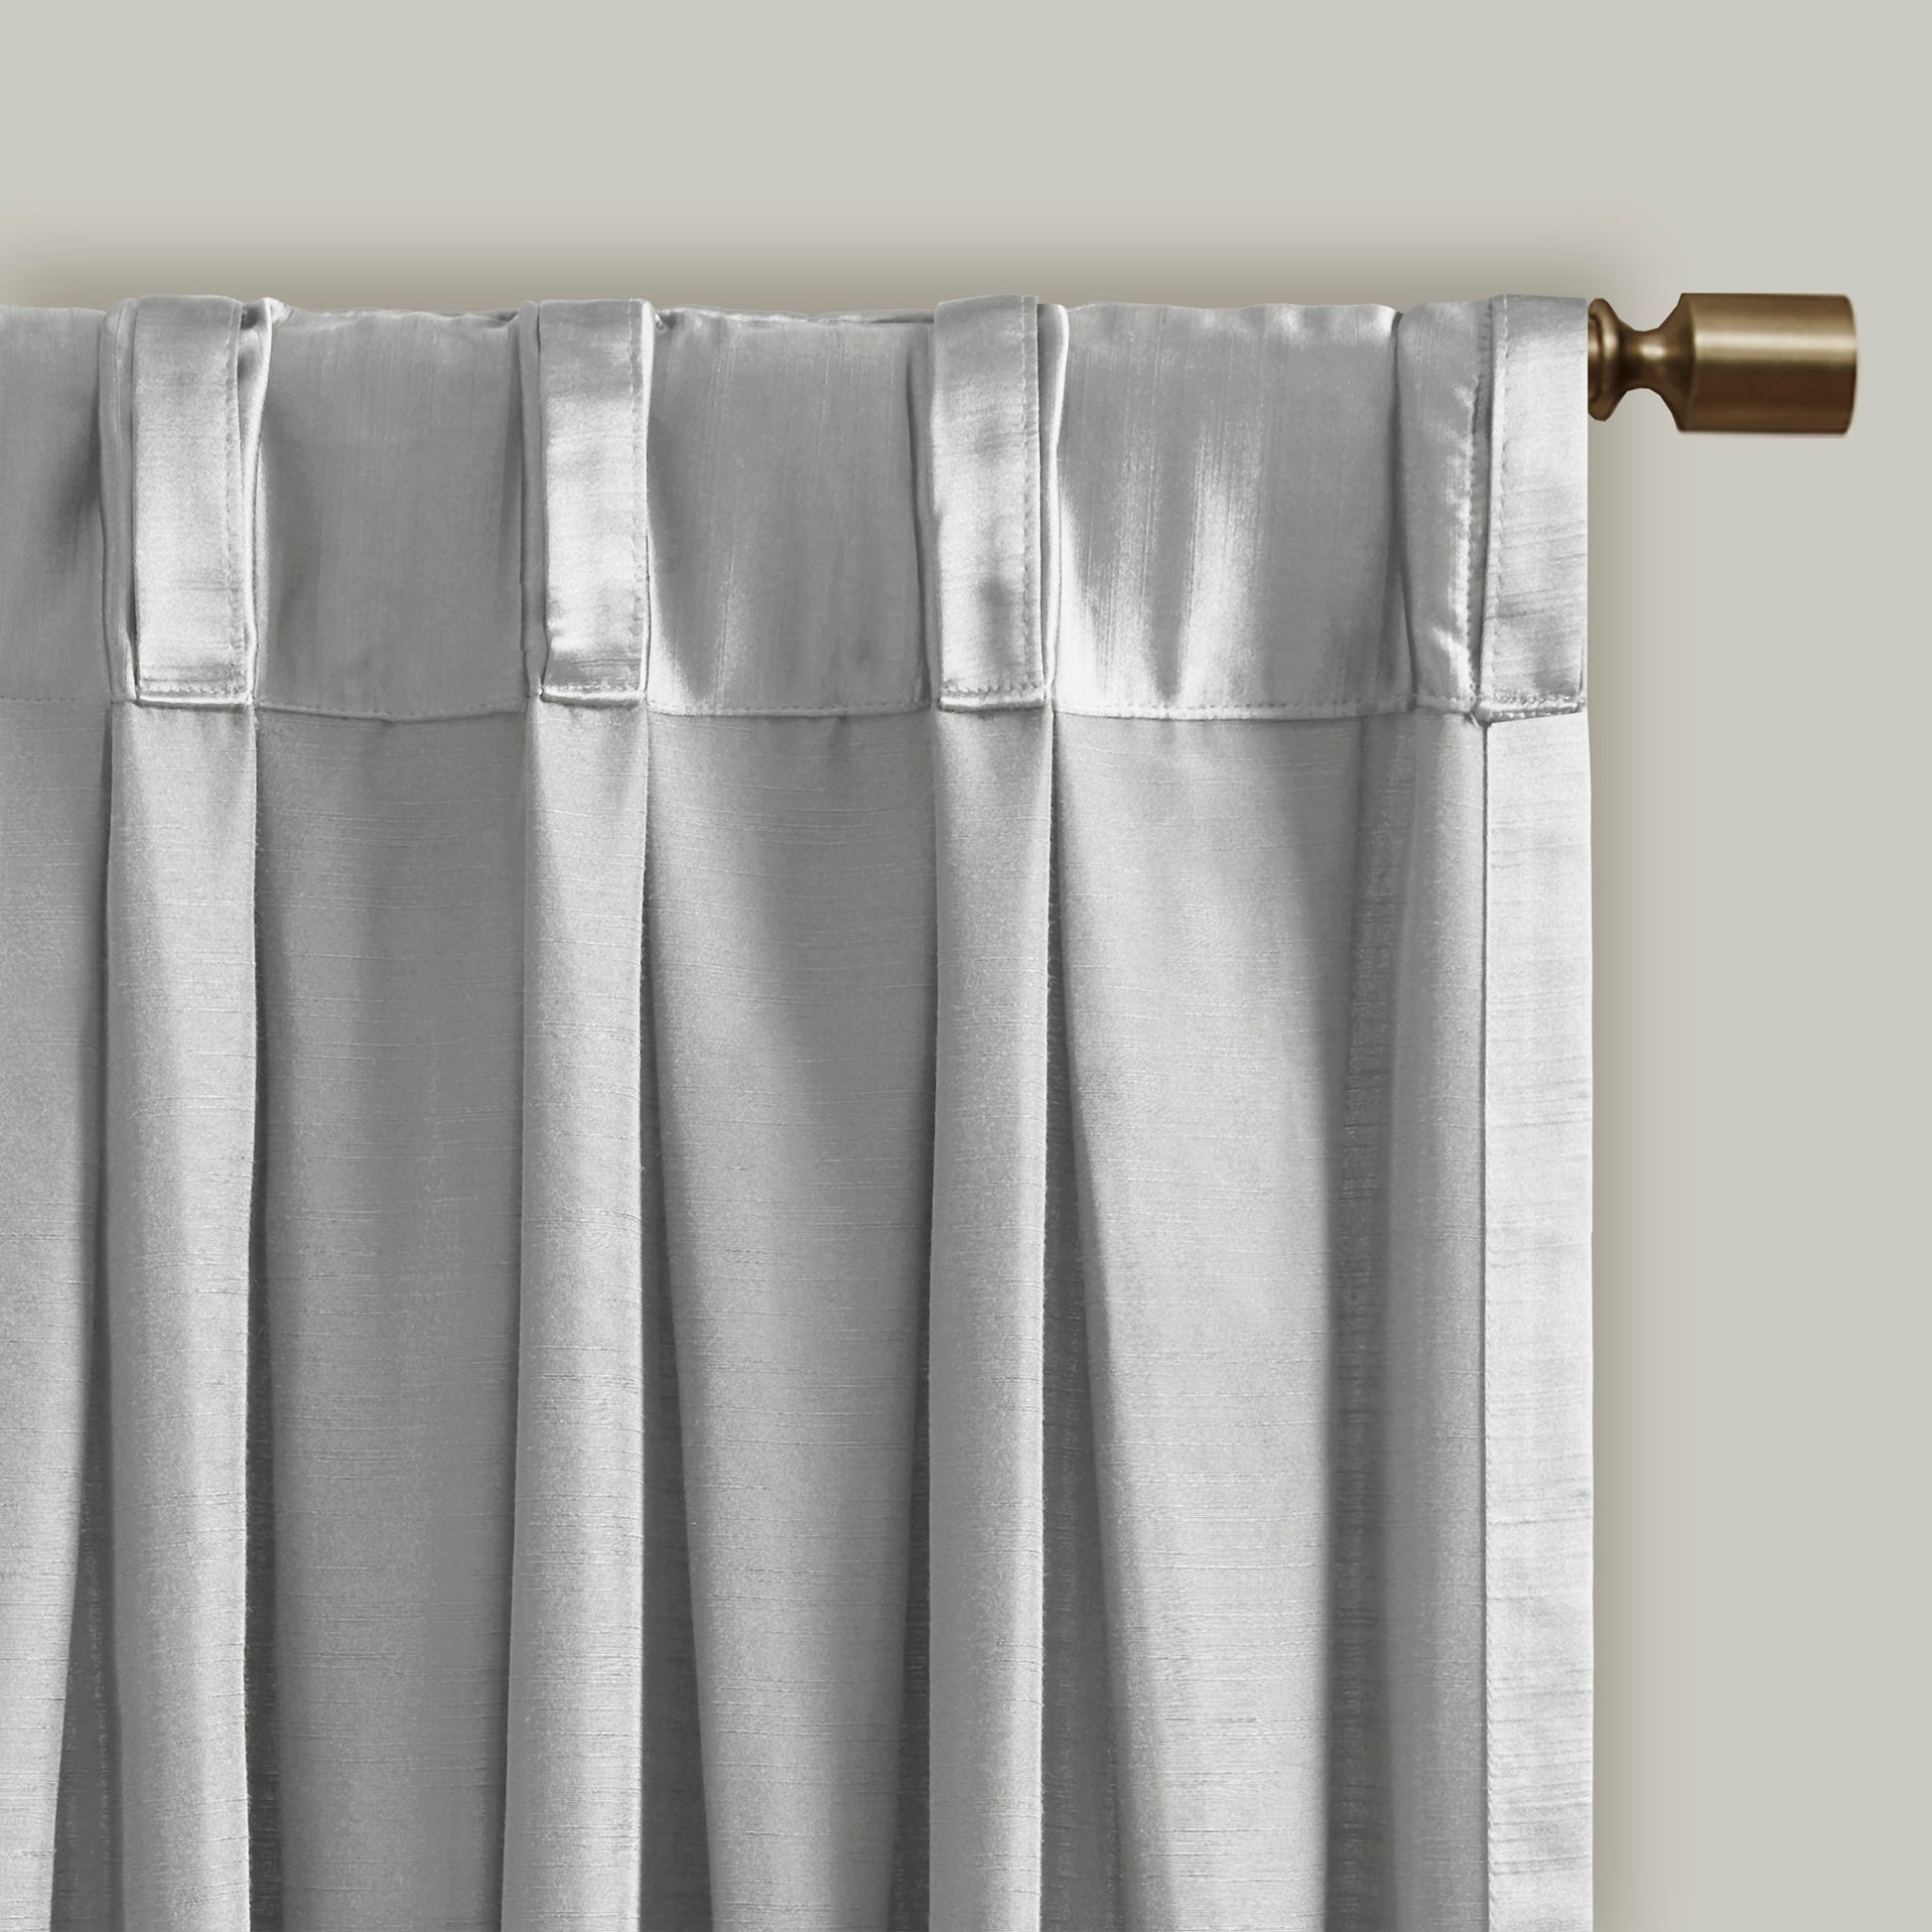 Croscill Classics Pleat Curtain Panel with Tieback (Single)